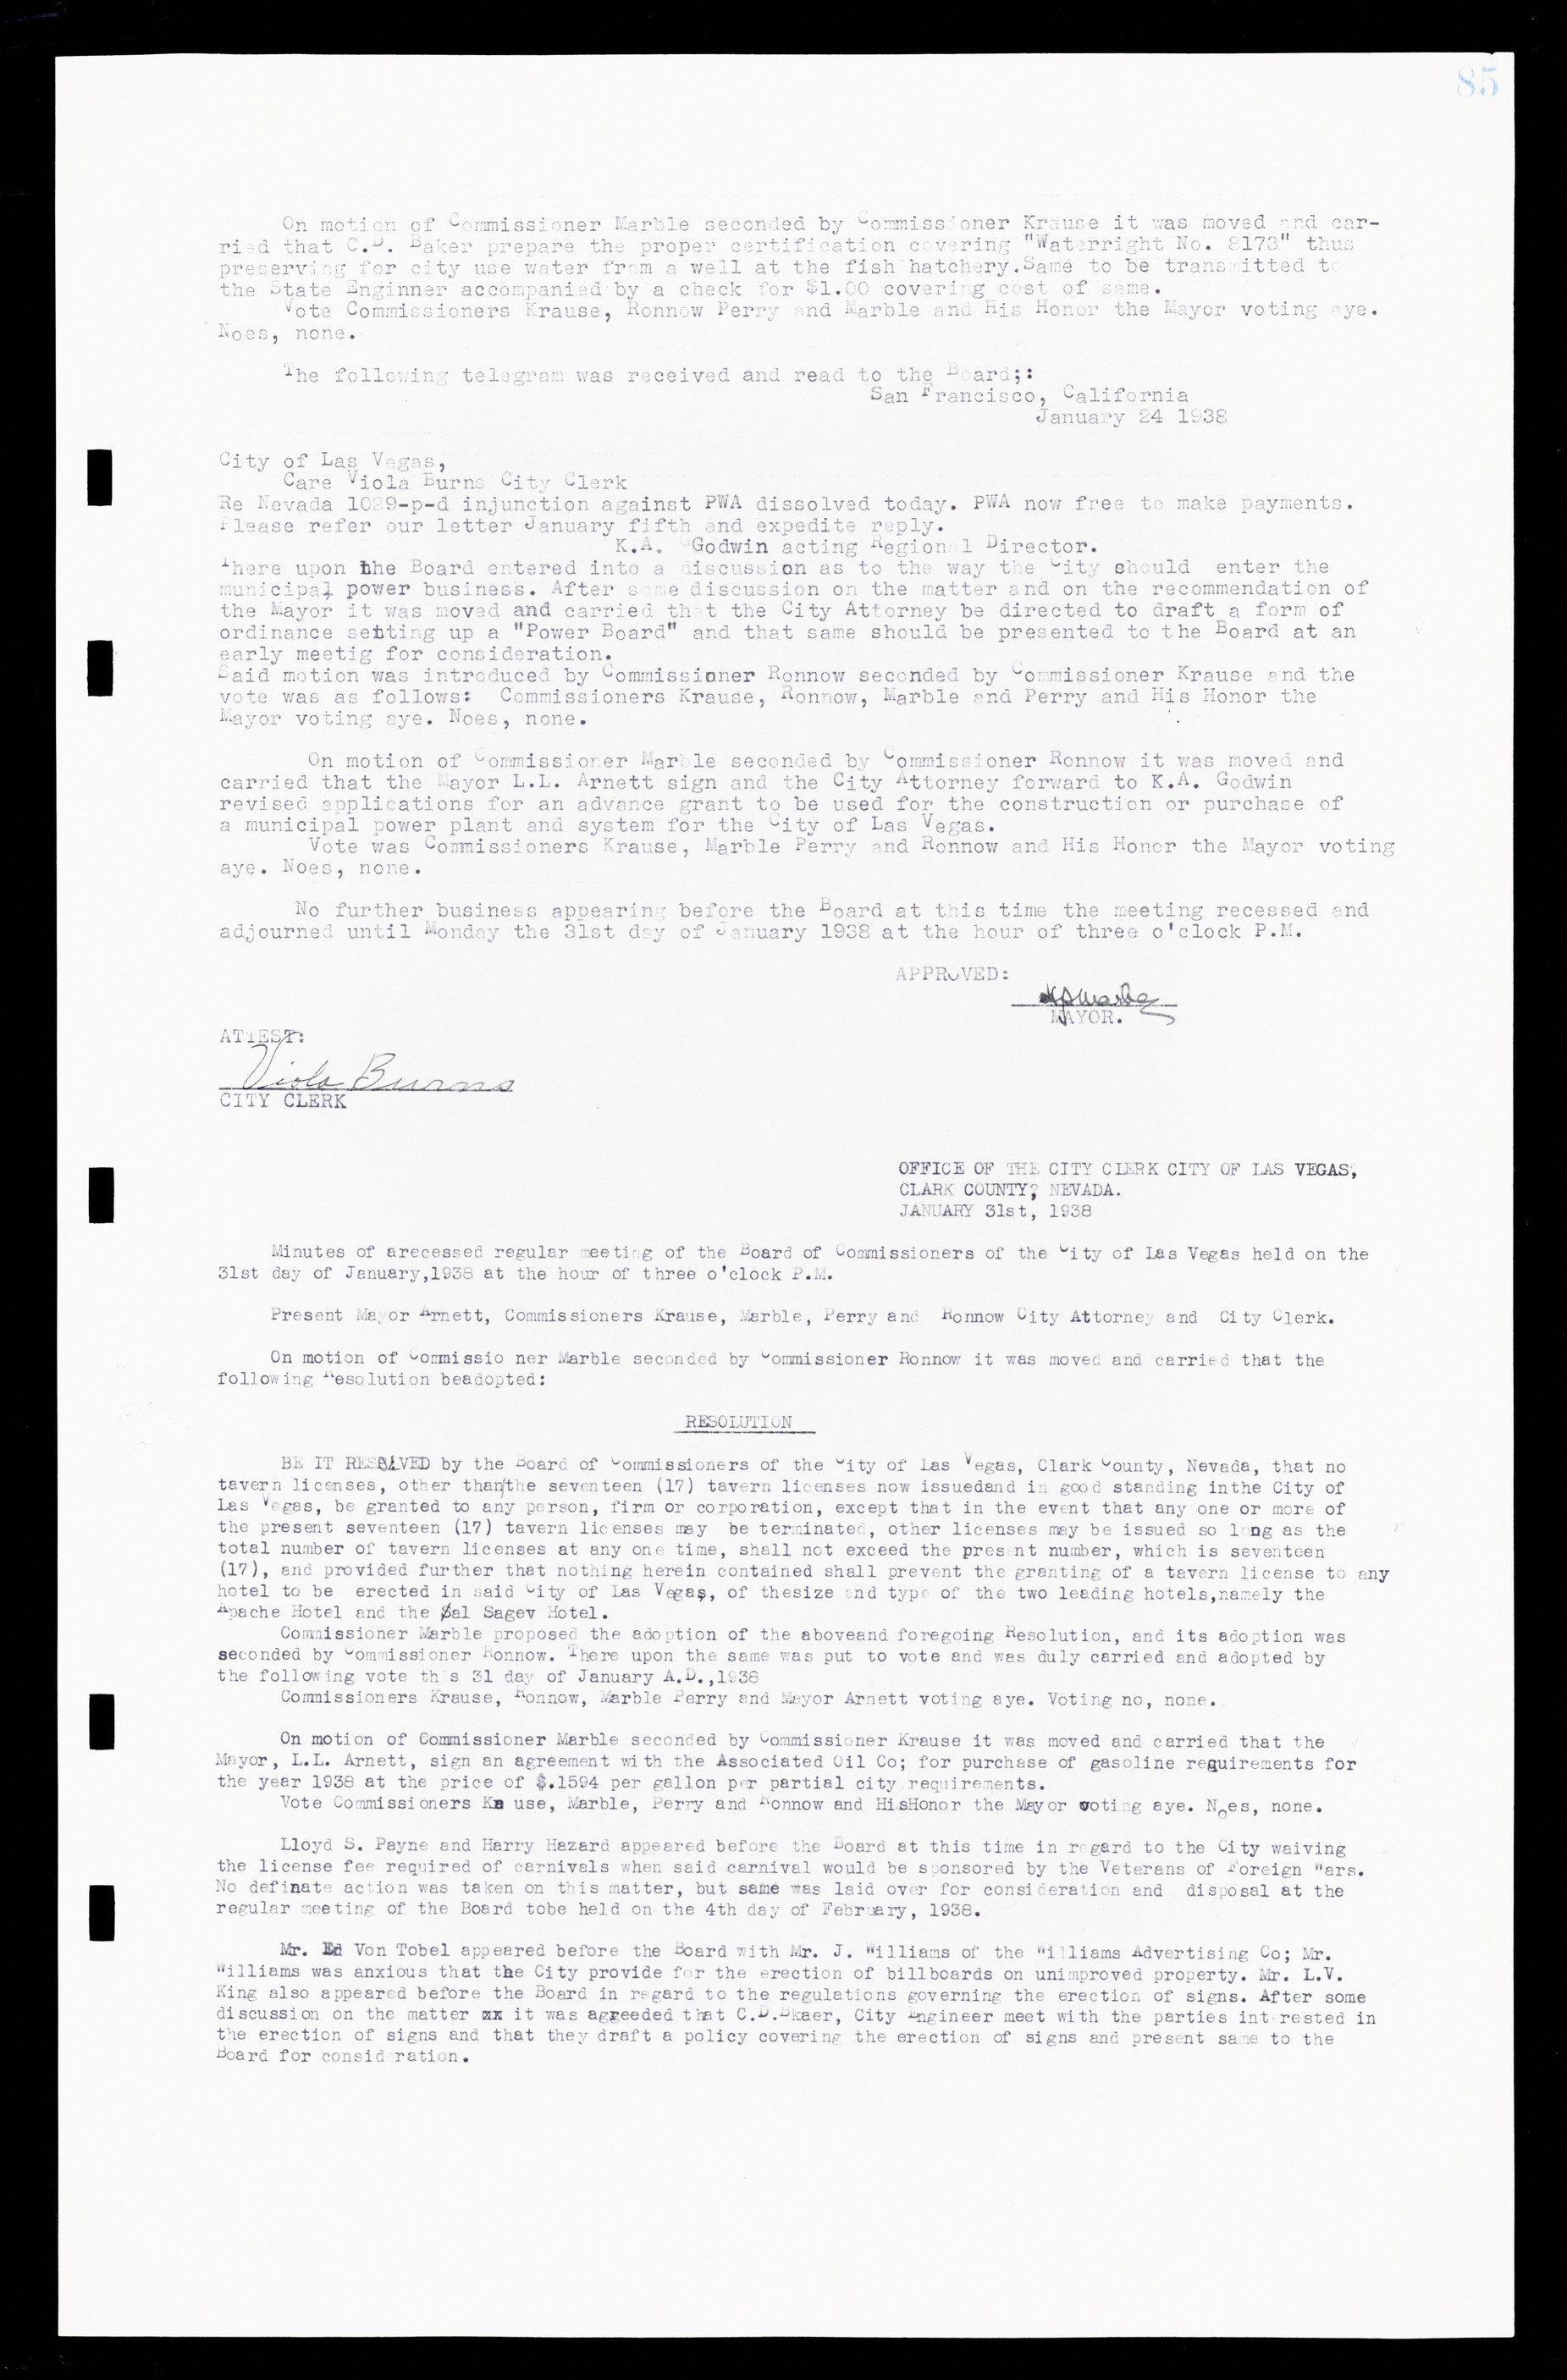 Las Vegas City Commission Minutes, February 17, 1937 to August 4, 1942, lvc000004-96